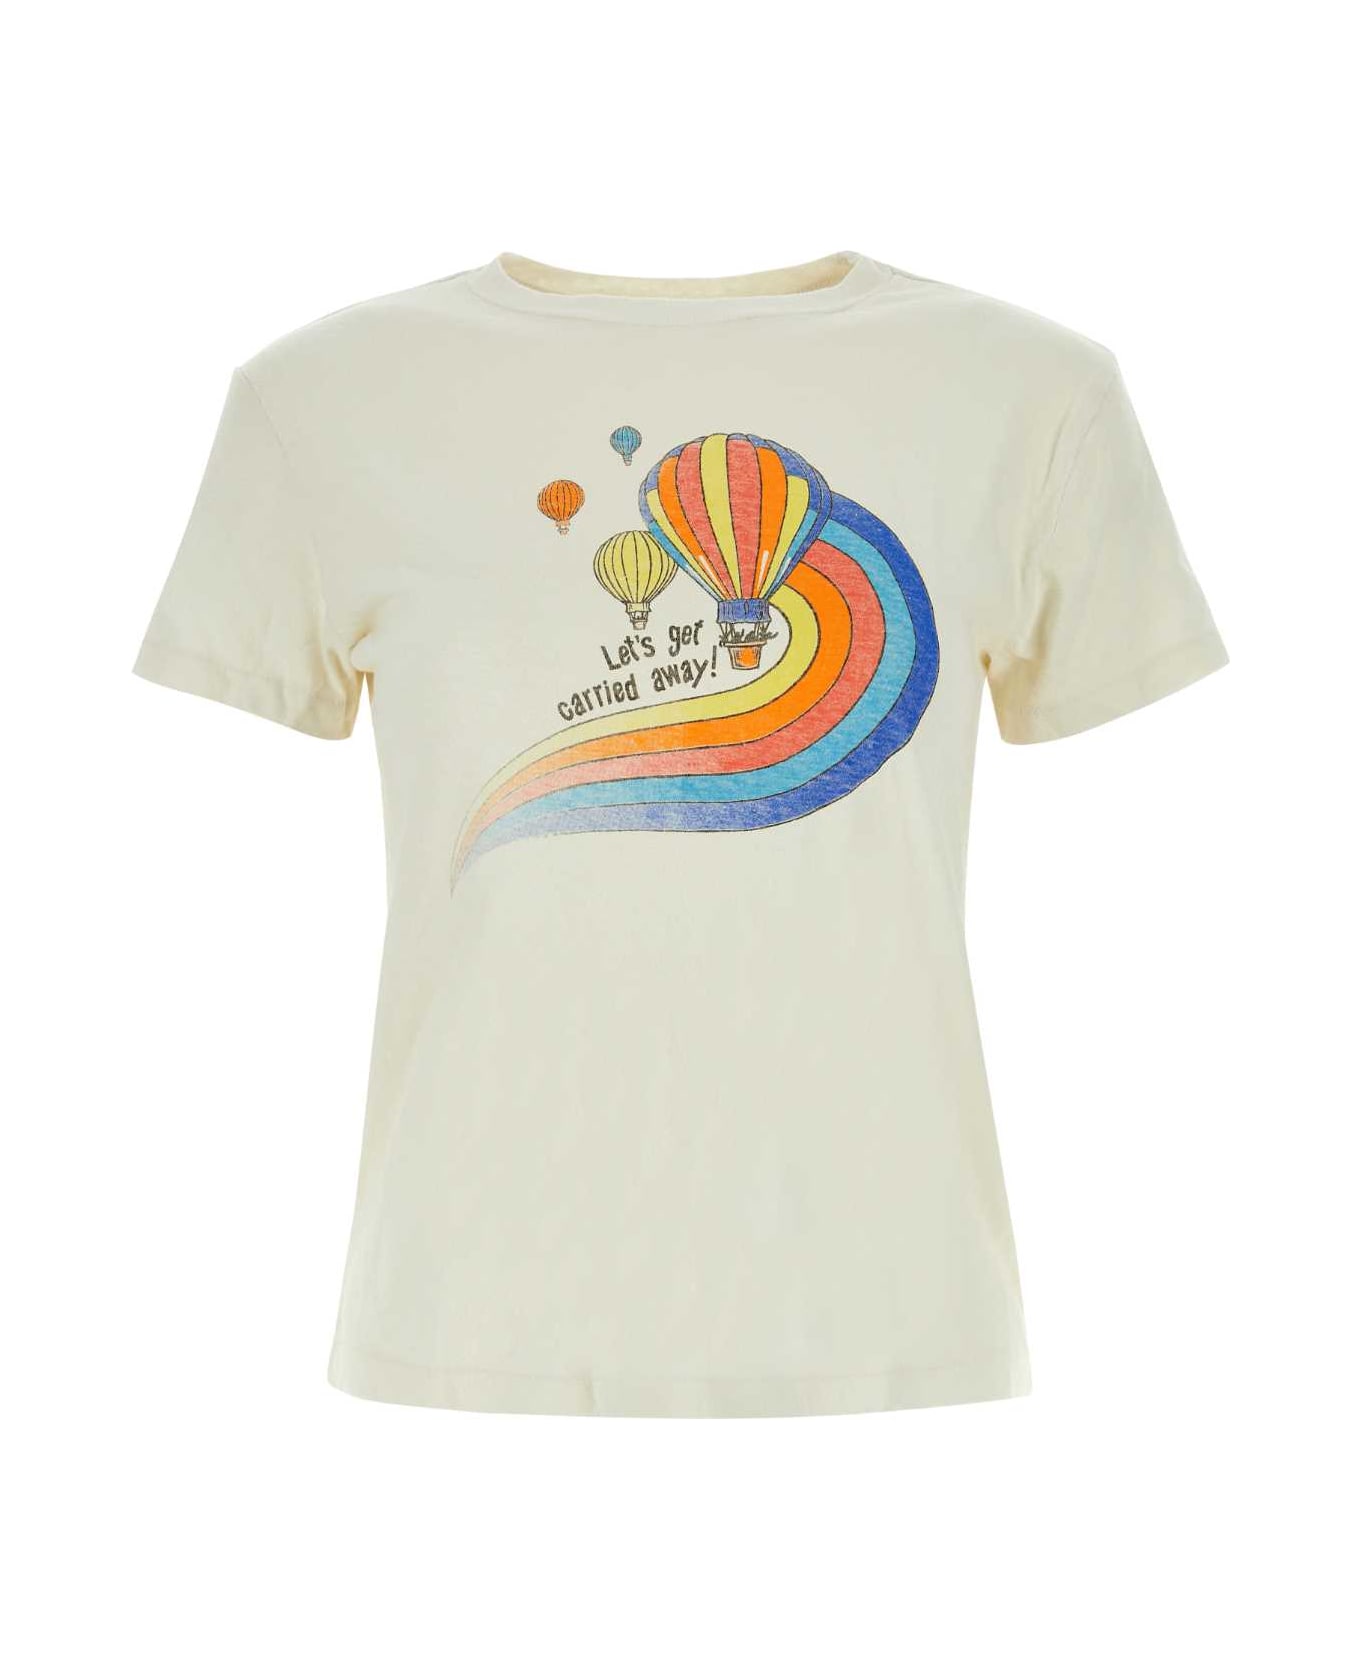 RE/DONE Chalk Cotton T-shirt - VINTAGEWHITE